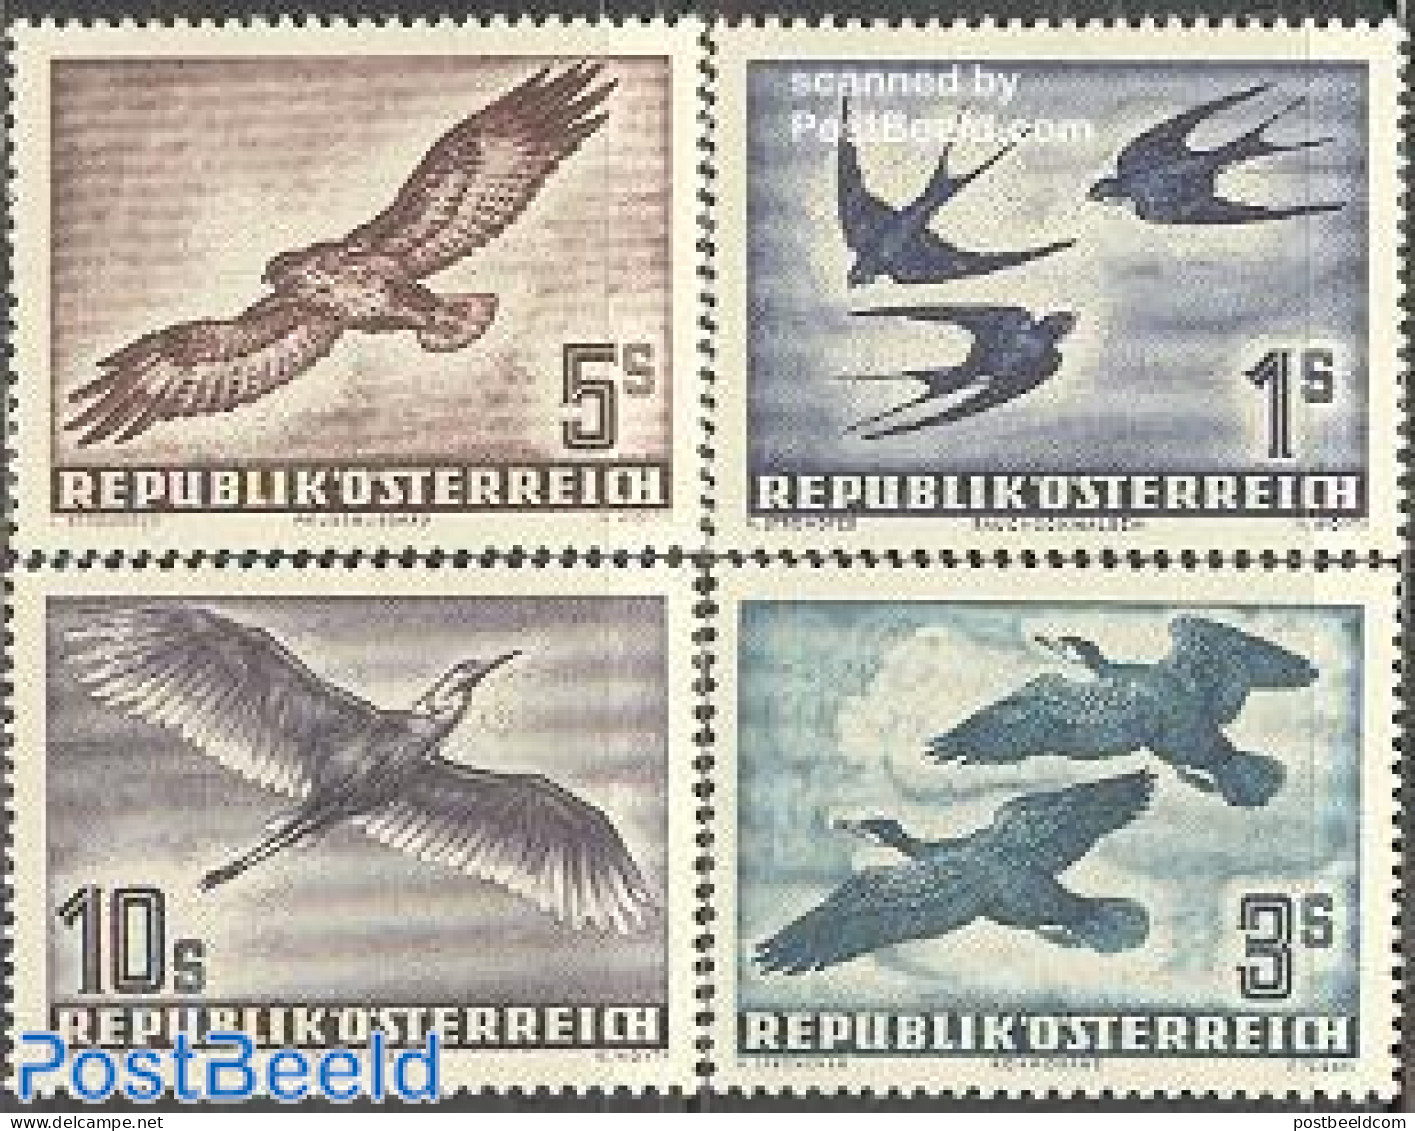 Austria 1953 Airmail, Birds 4v, Mint NH, Nature - Birds - Birds Of Prey - Neufs